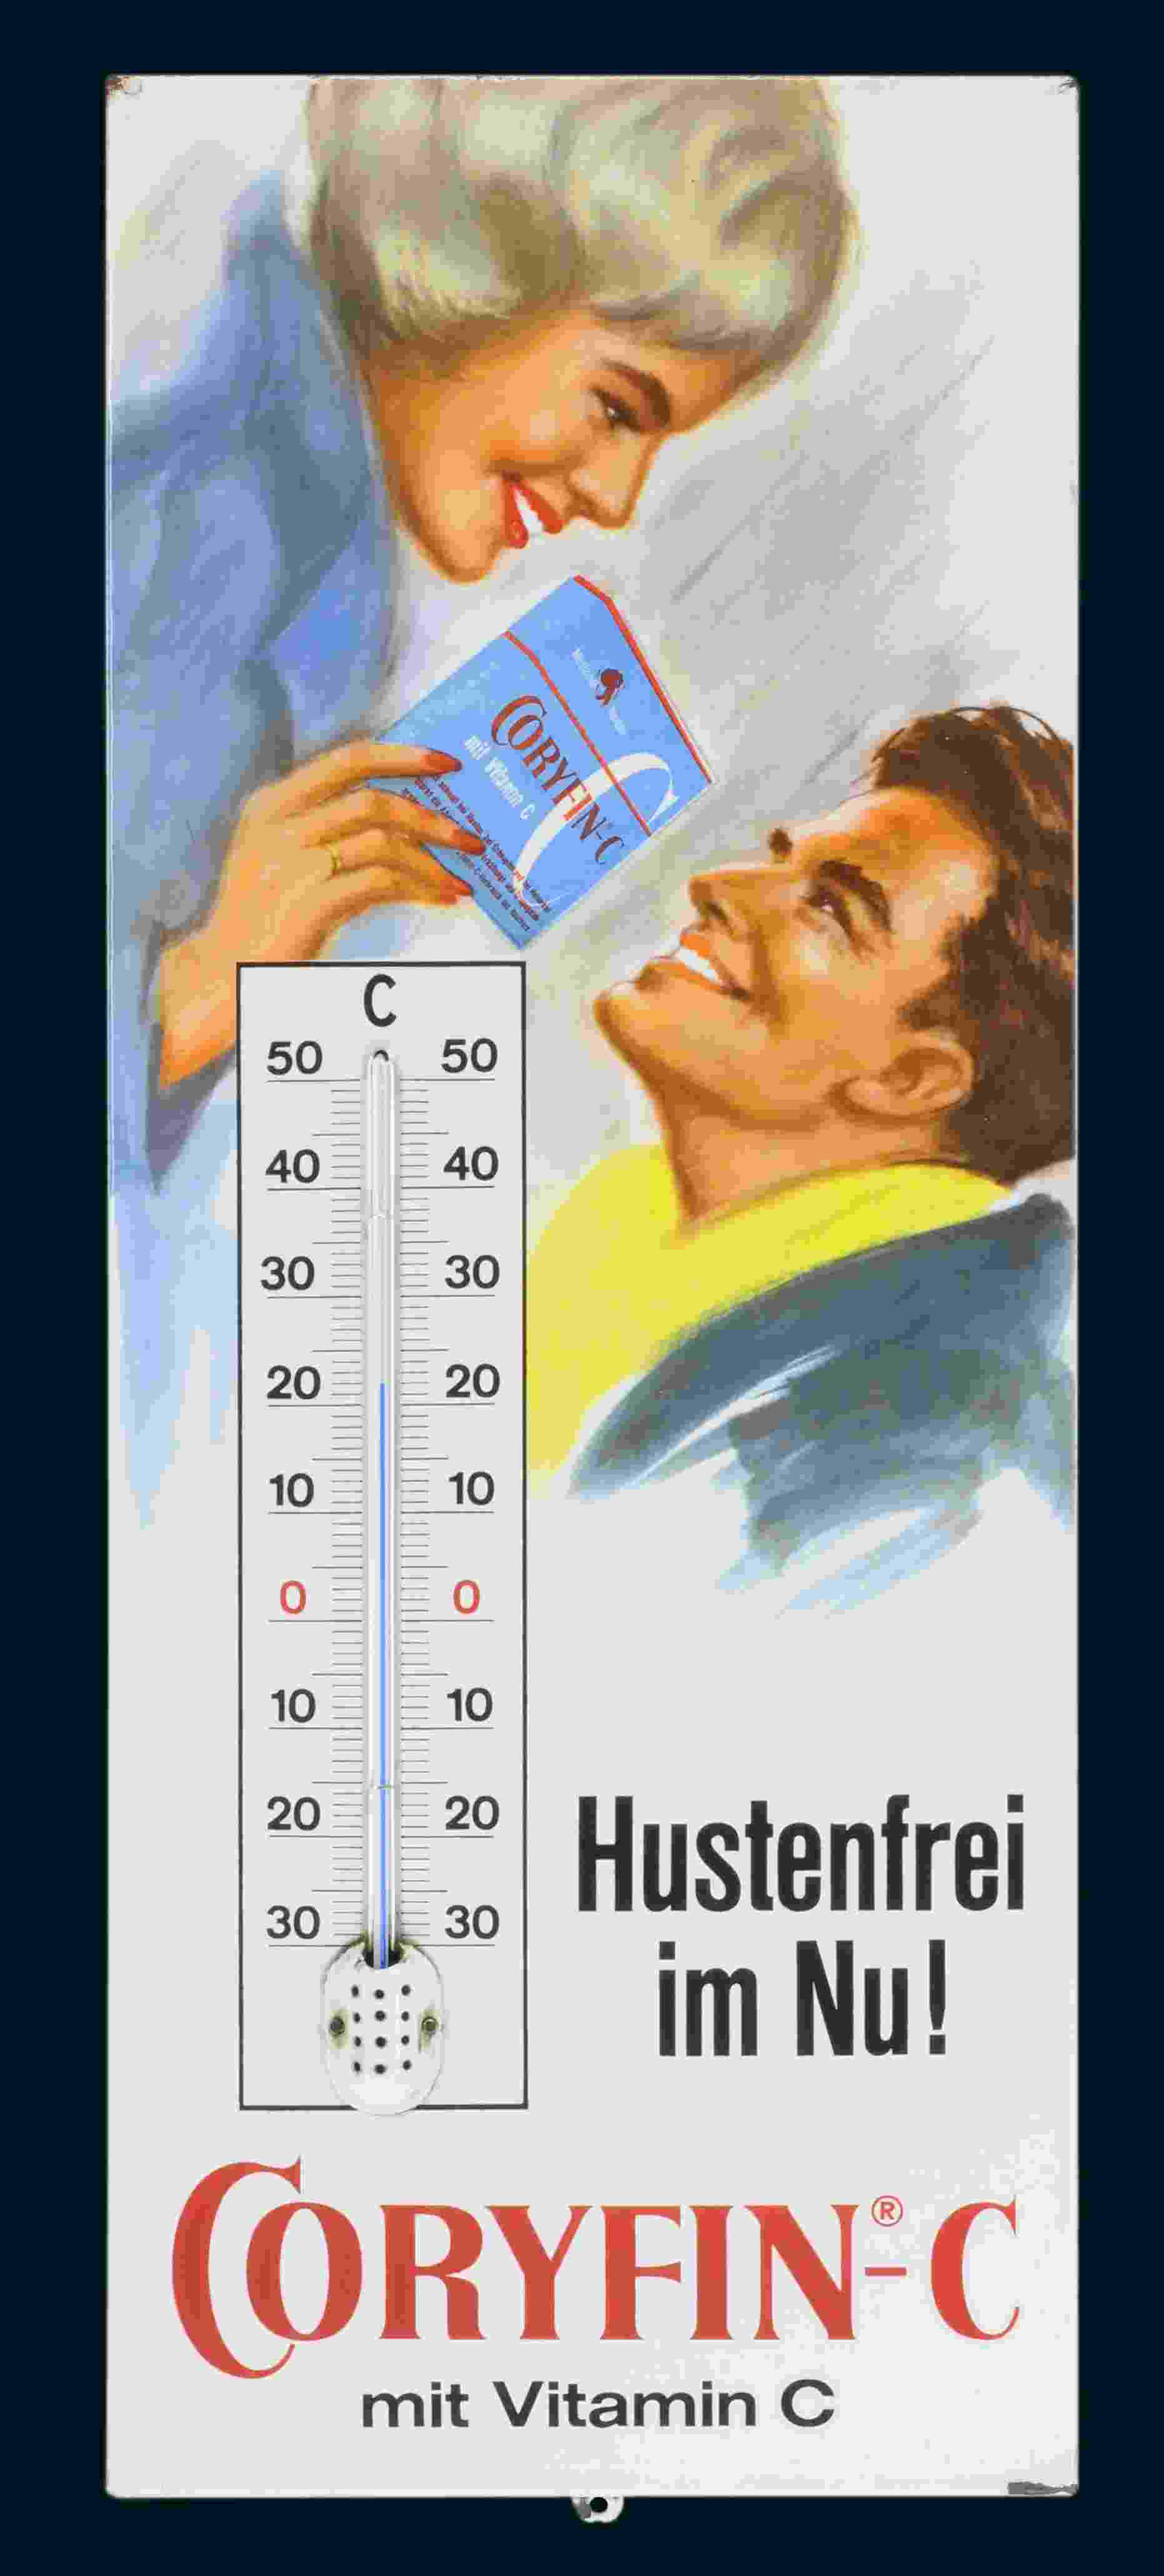 Coryfin-C Thermometer 